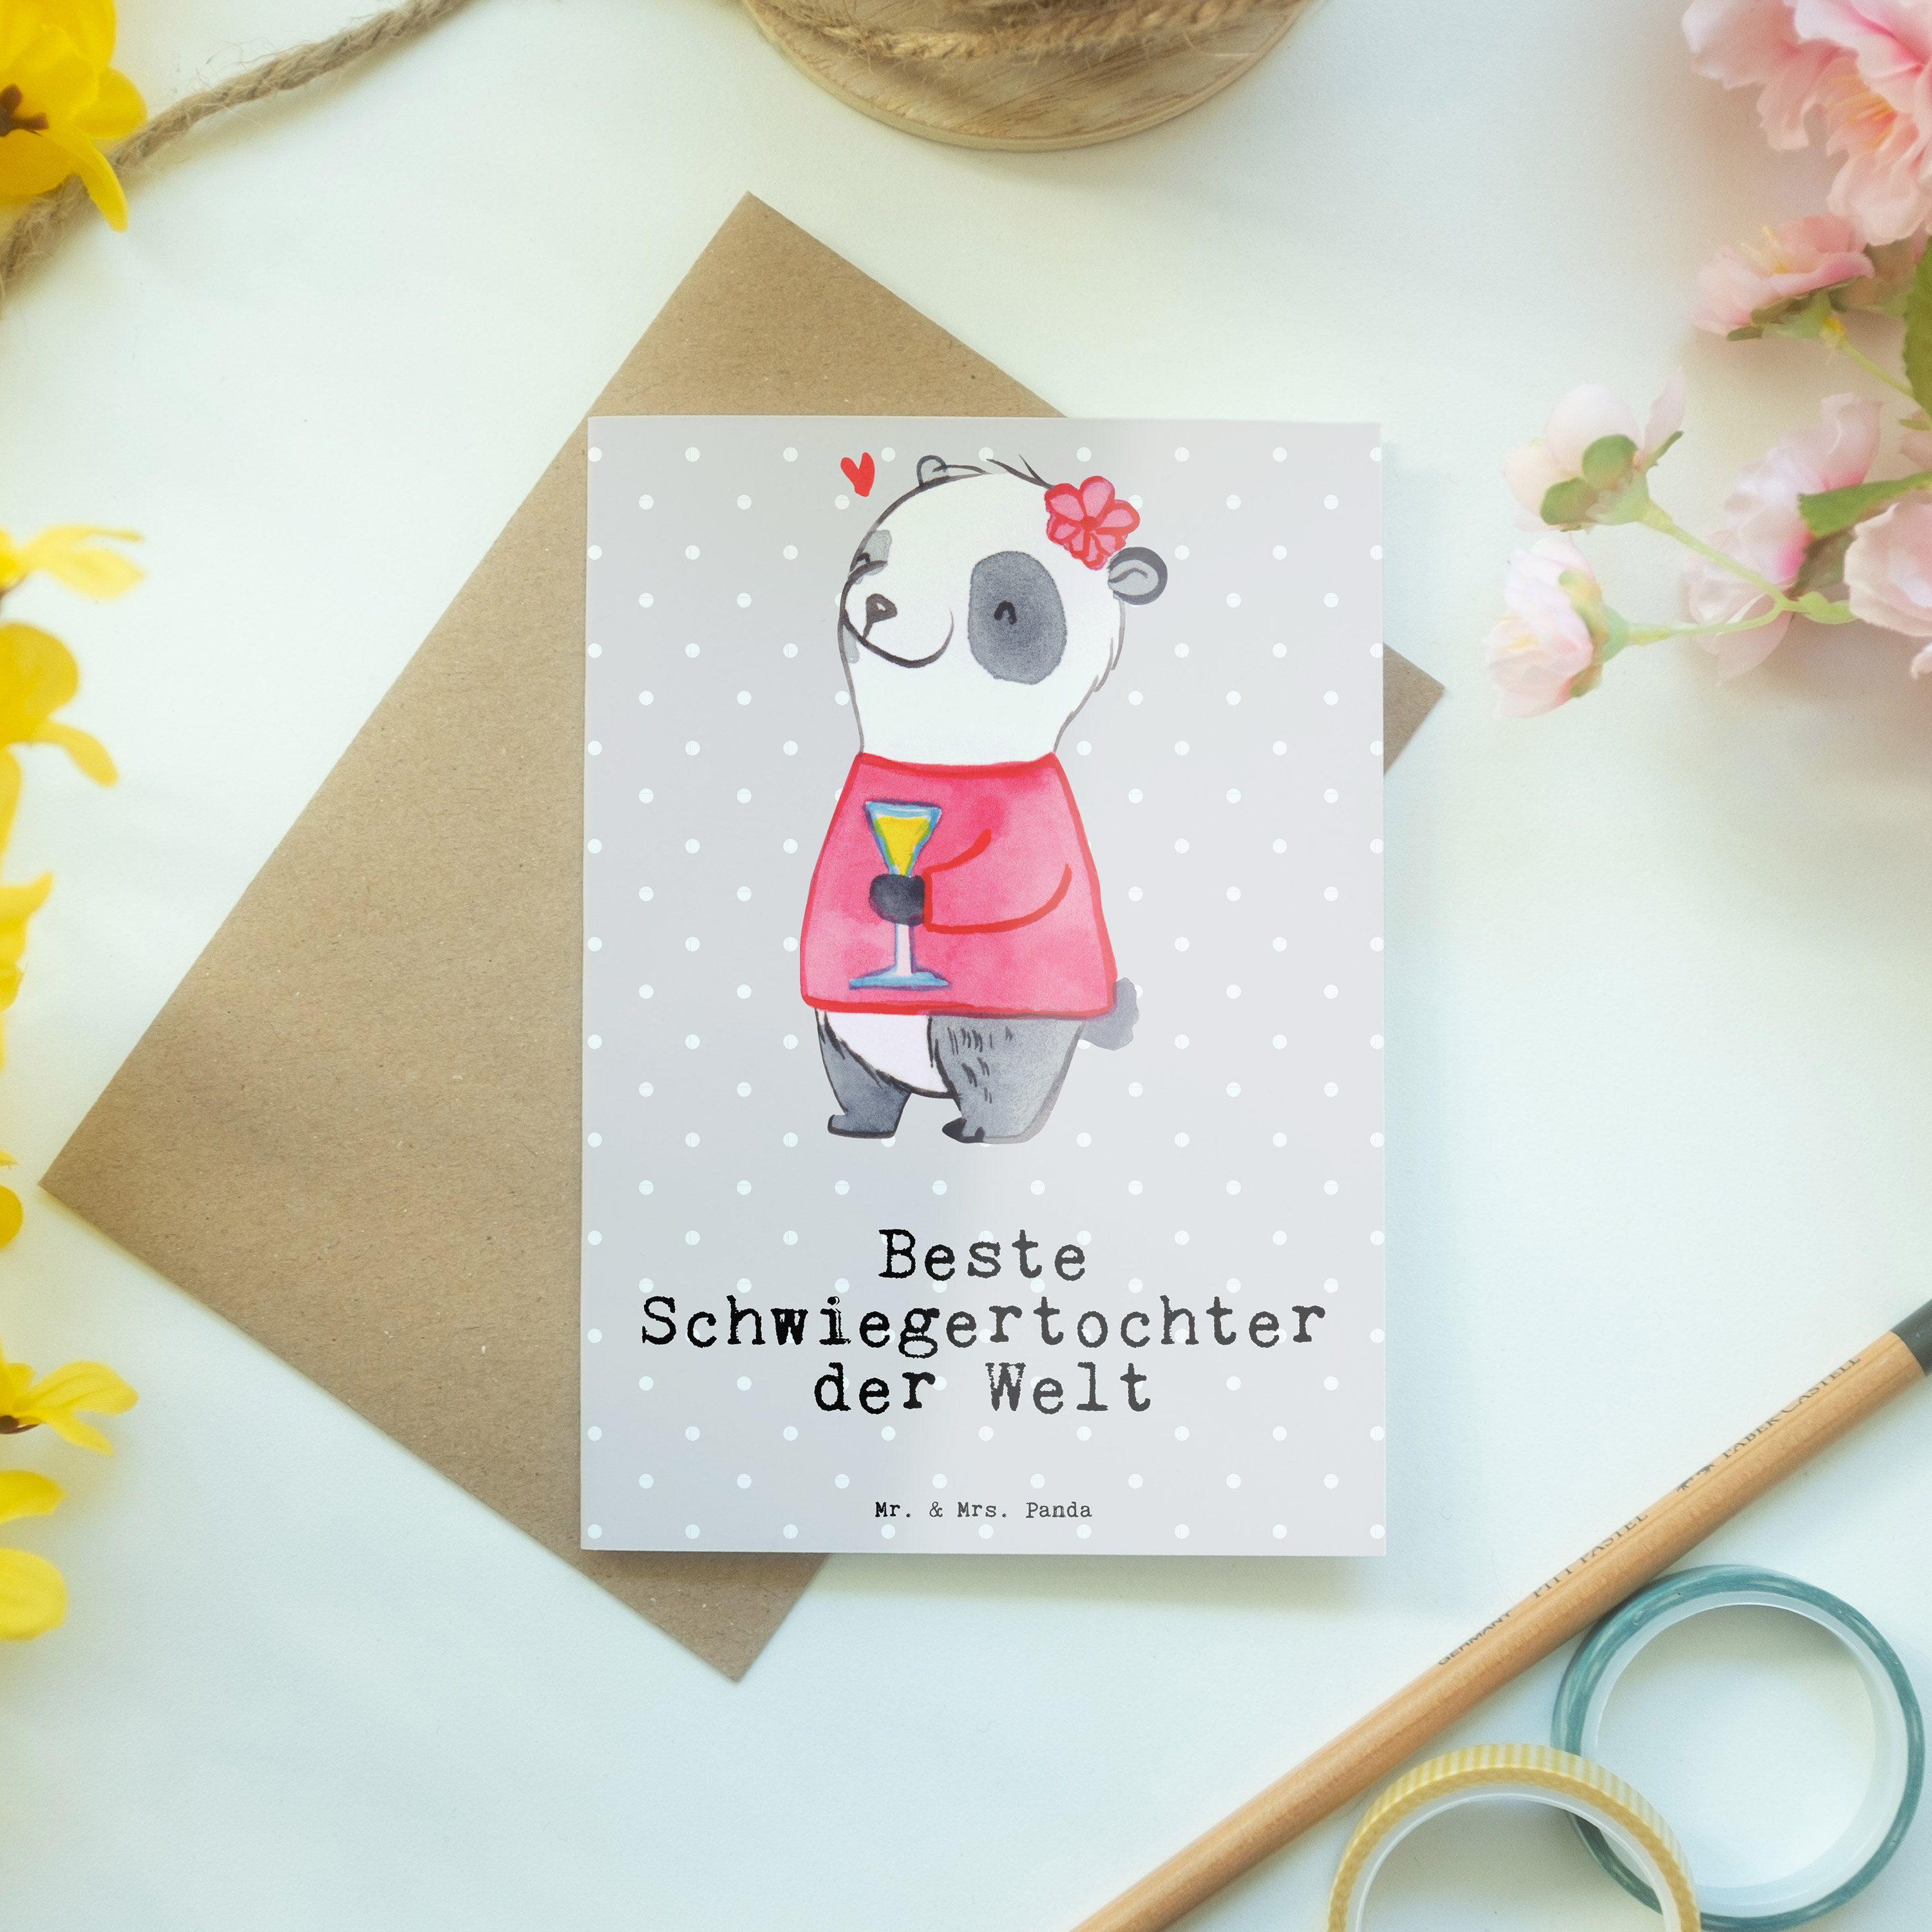 Beste Grußkarte & Geschenk, Pastell - Mr. Hoch Panda Mrs. - Panda Welt Schwiegertochter Grau der